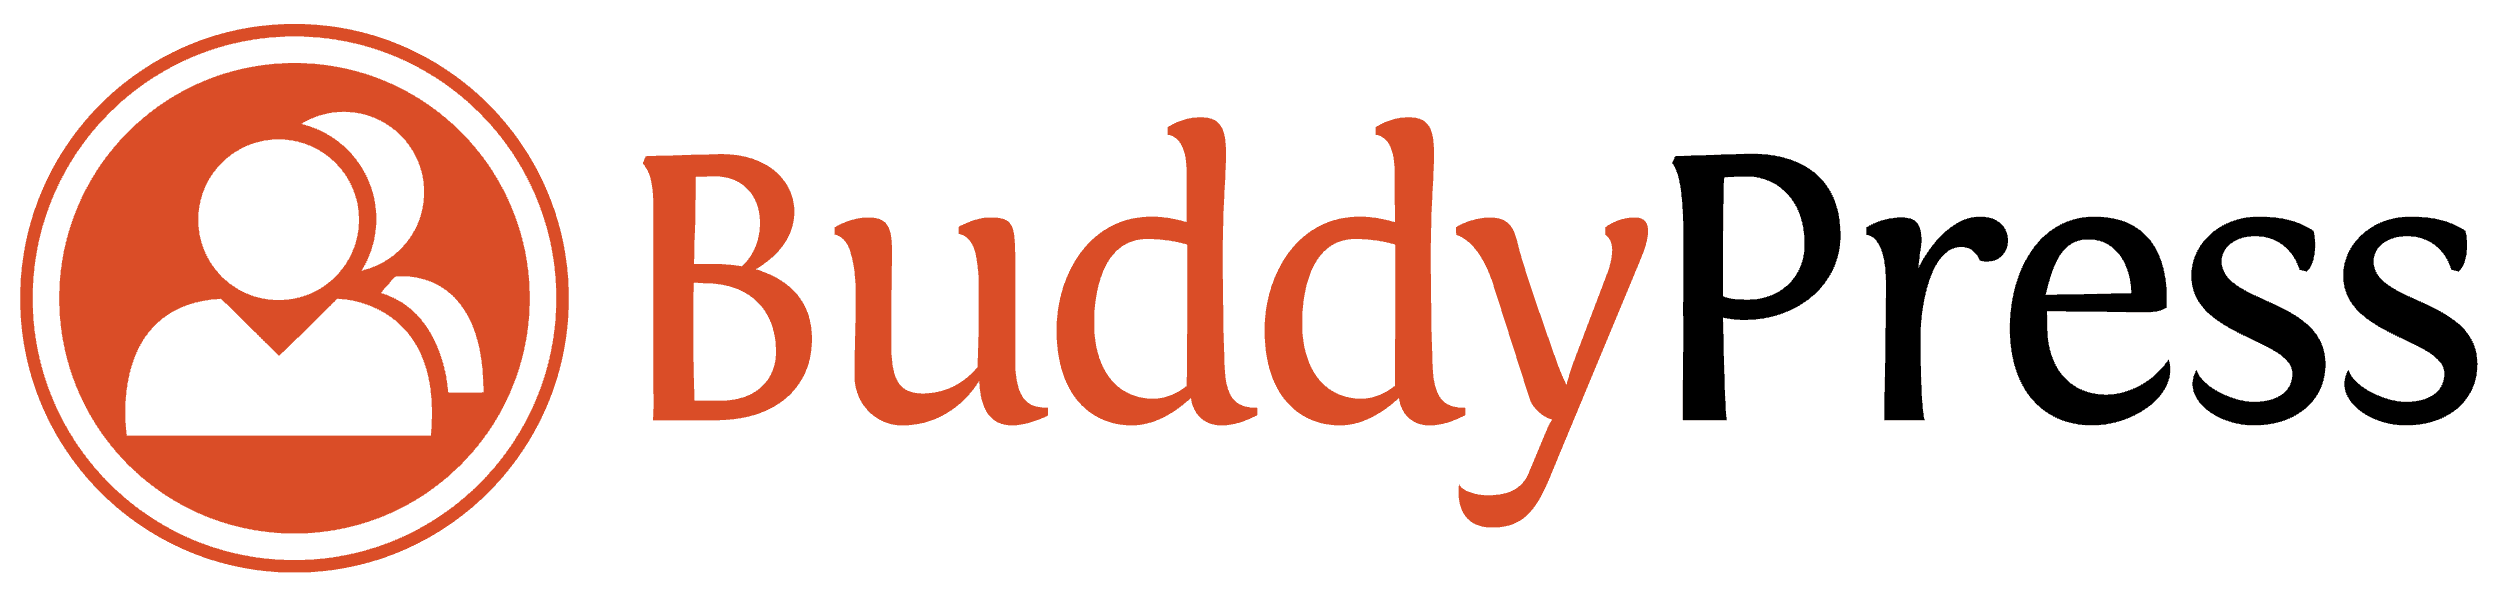 BuddyPress - Félagsnet fyrir Wordpress